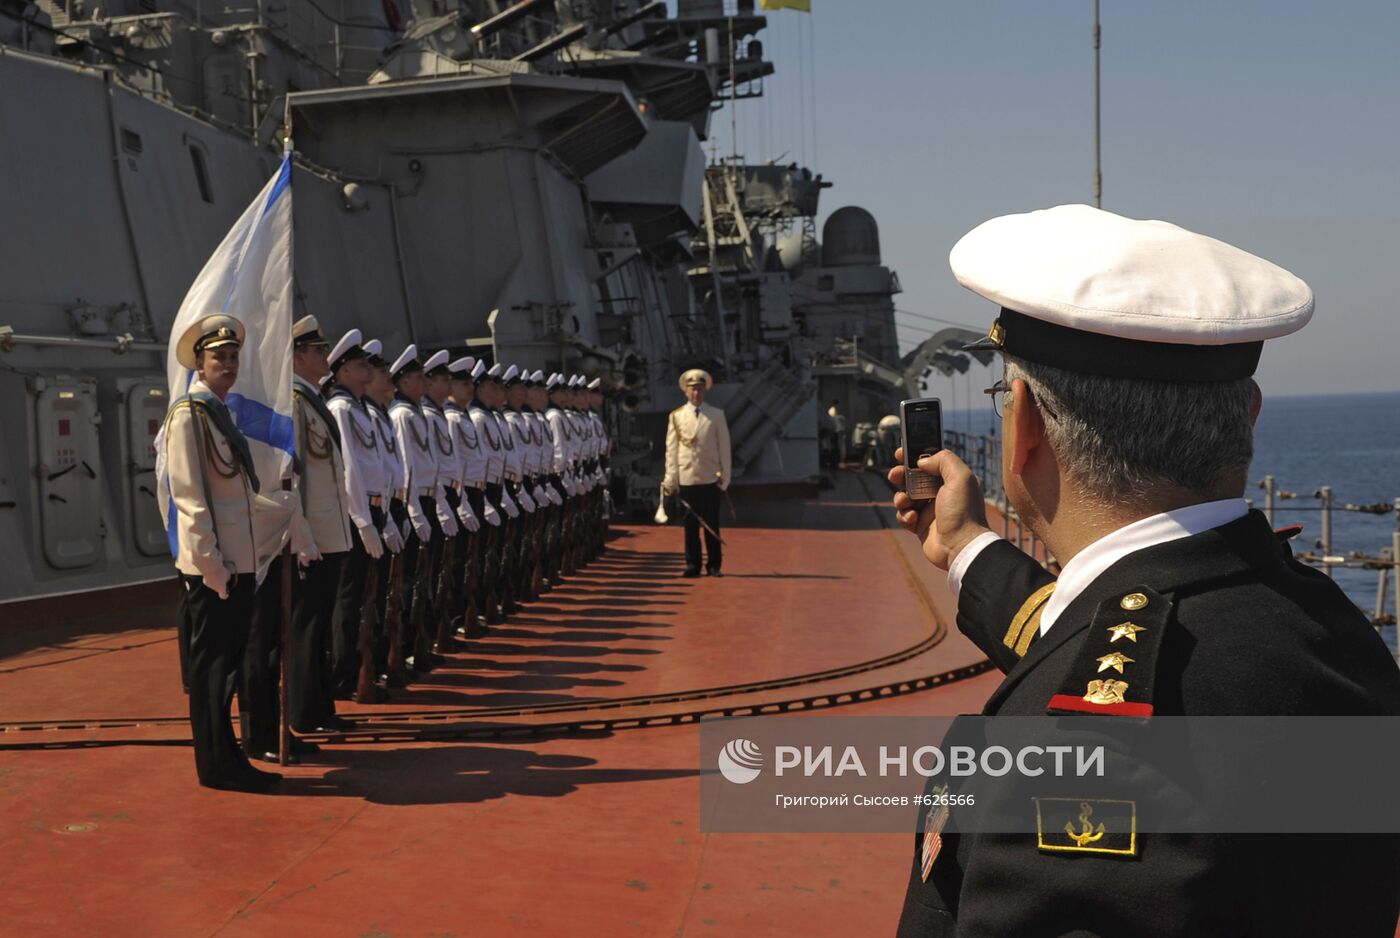 Заход ракетного крейсера "Петр Великий" в сирийский порт Тартус